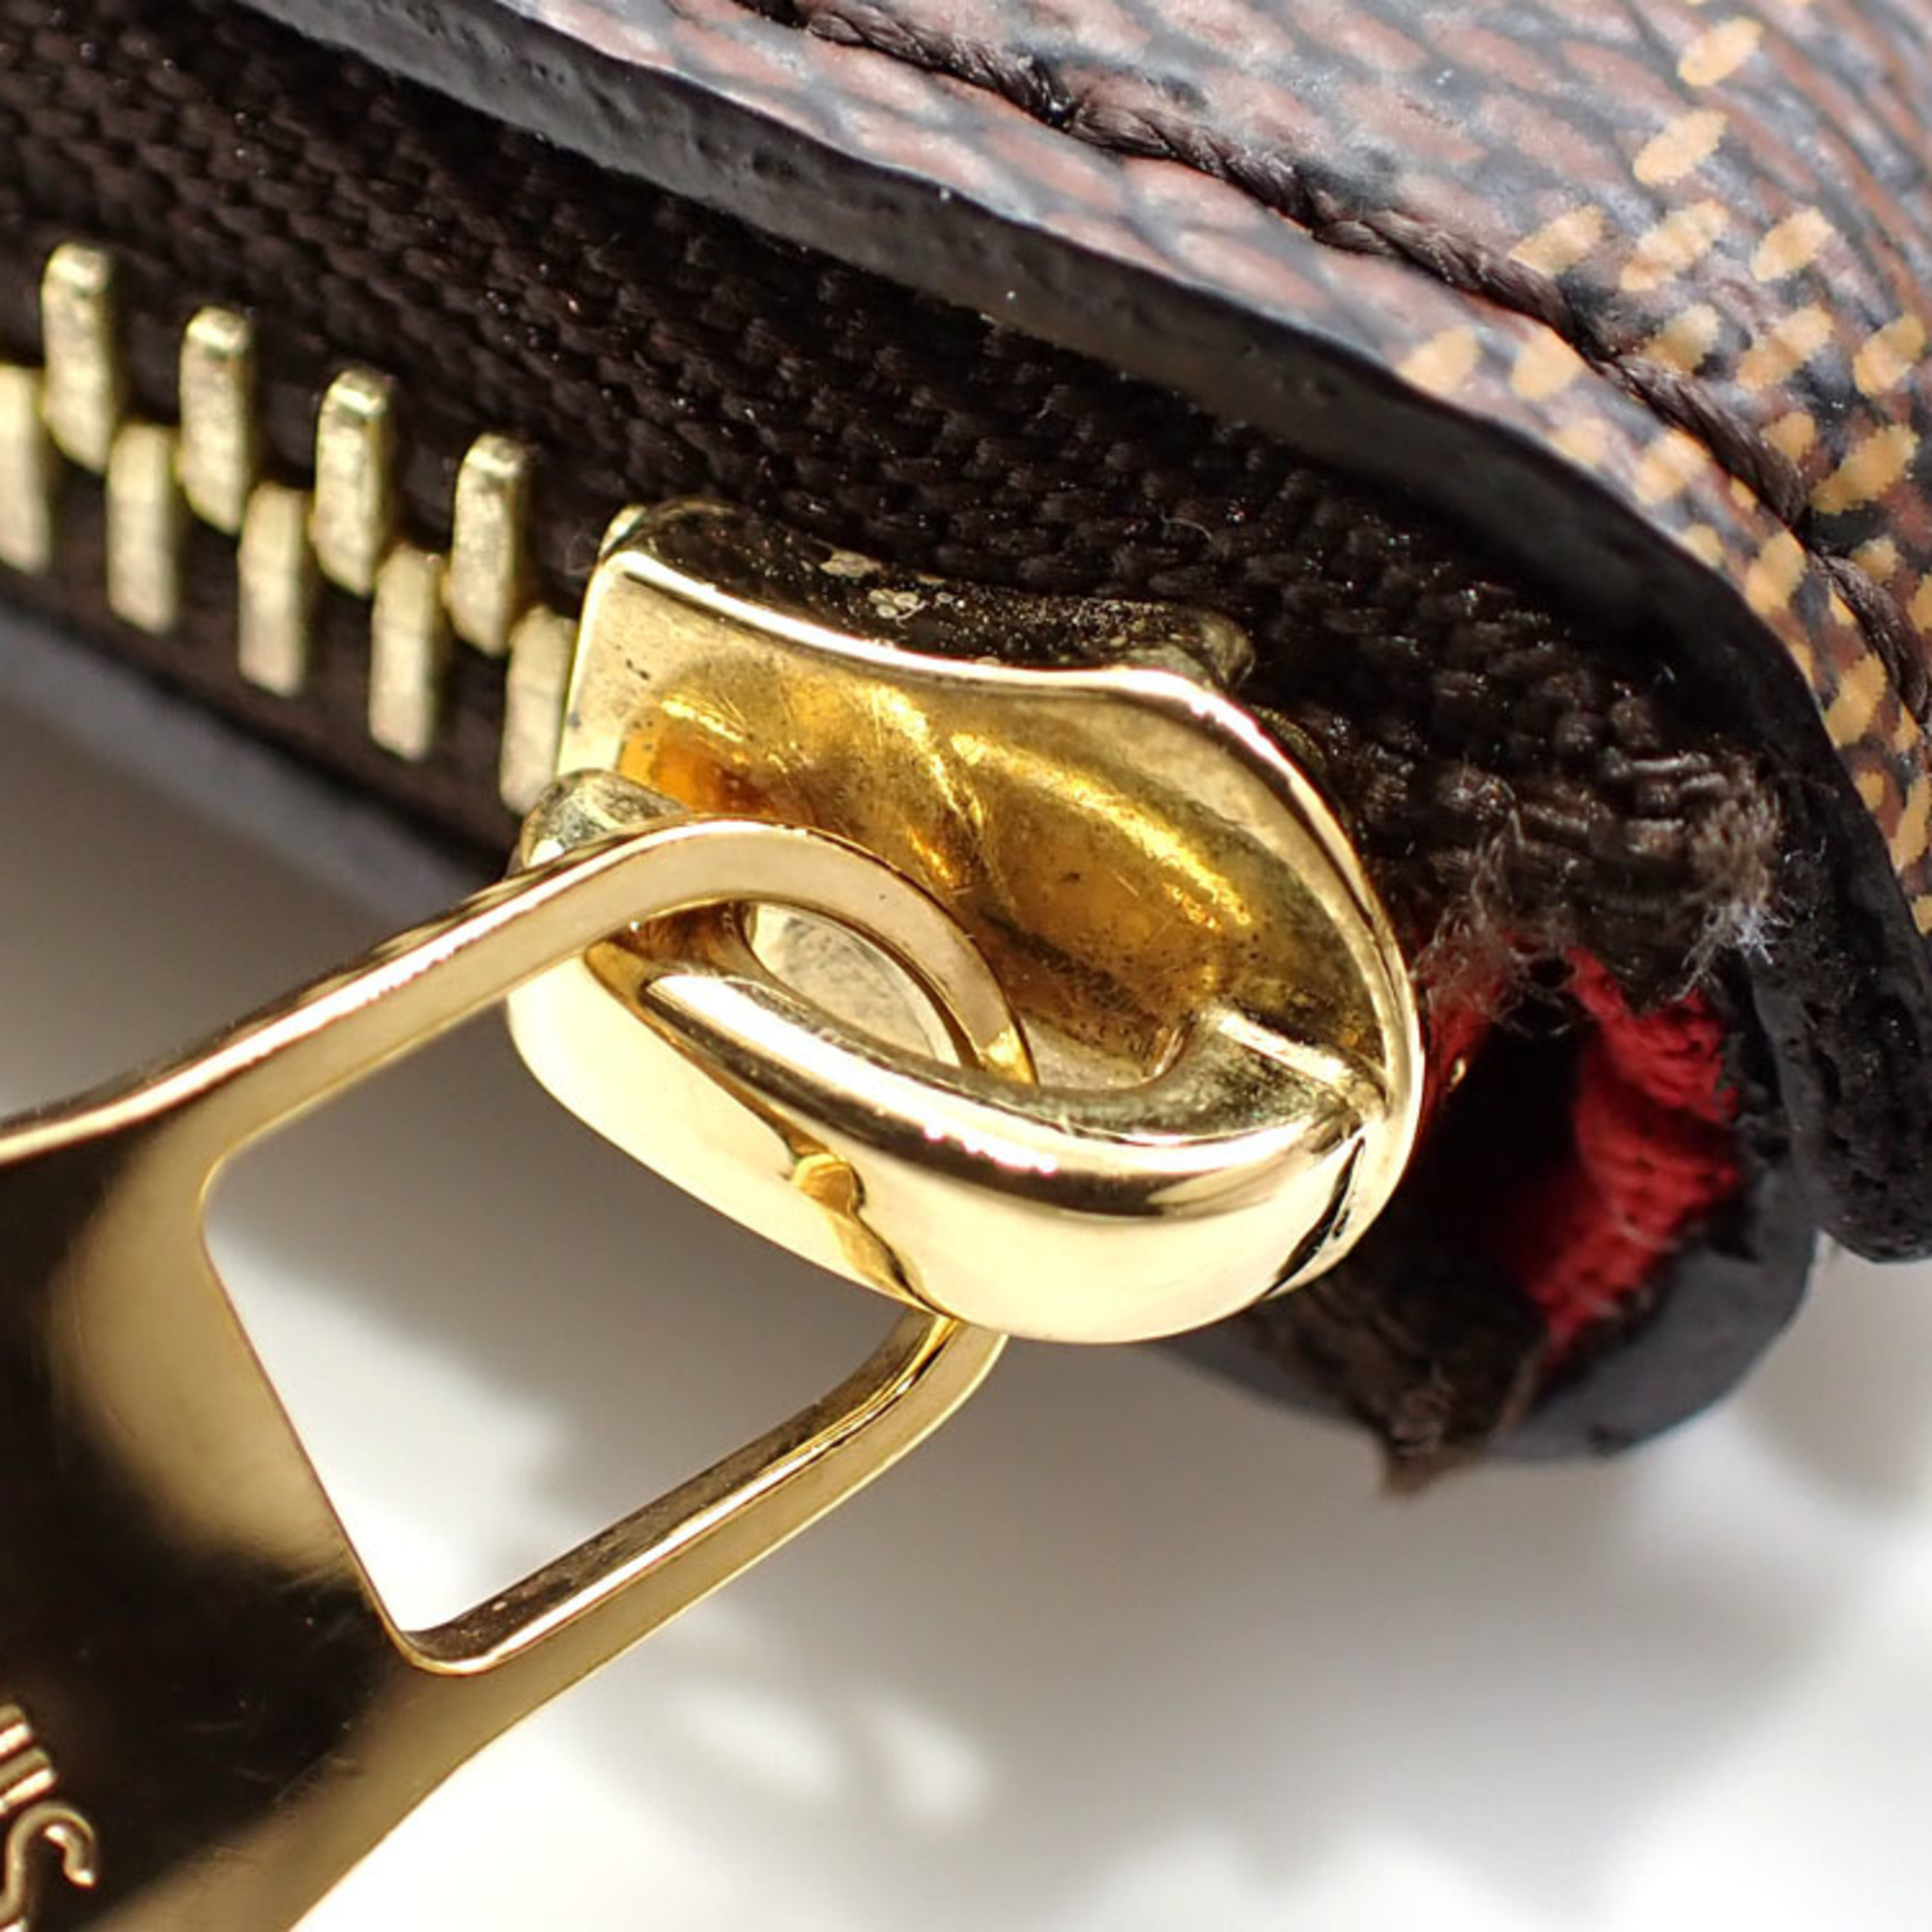 Louis Vuitton Handbag Damier Ebene Sienna PM Women's N41545 Shoulder